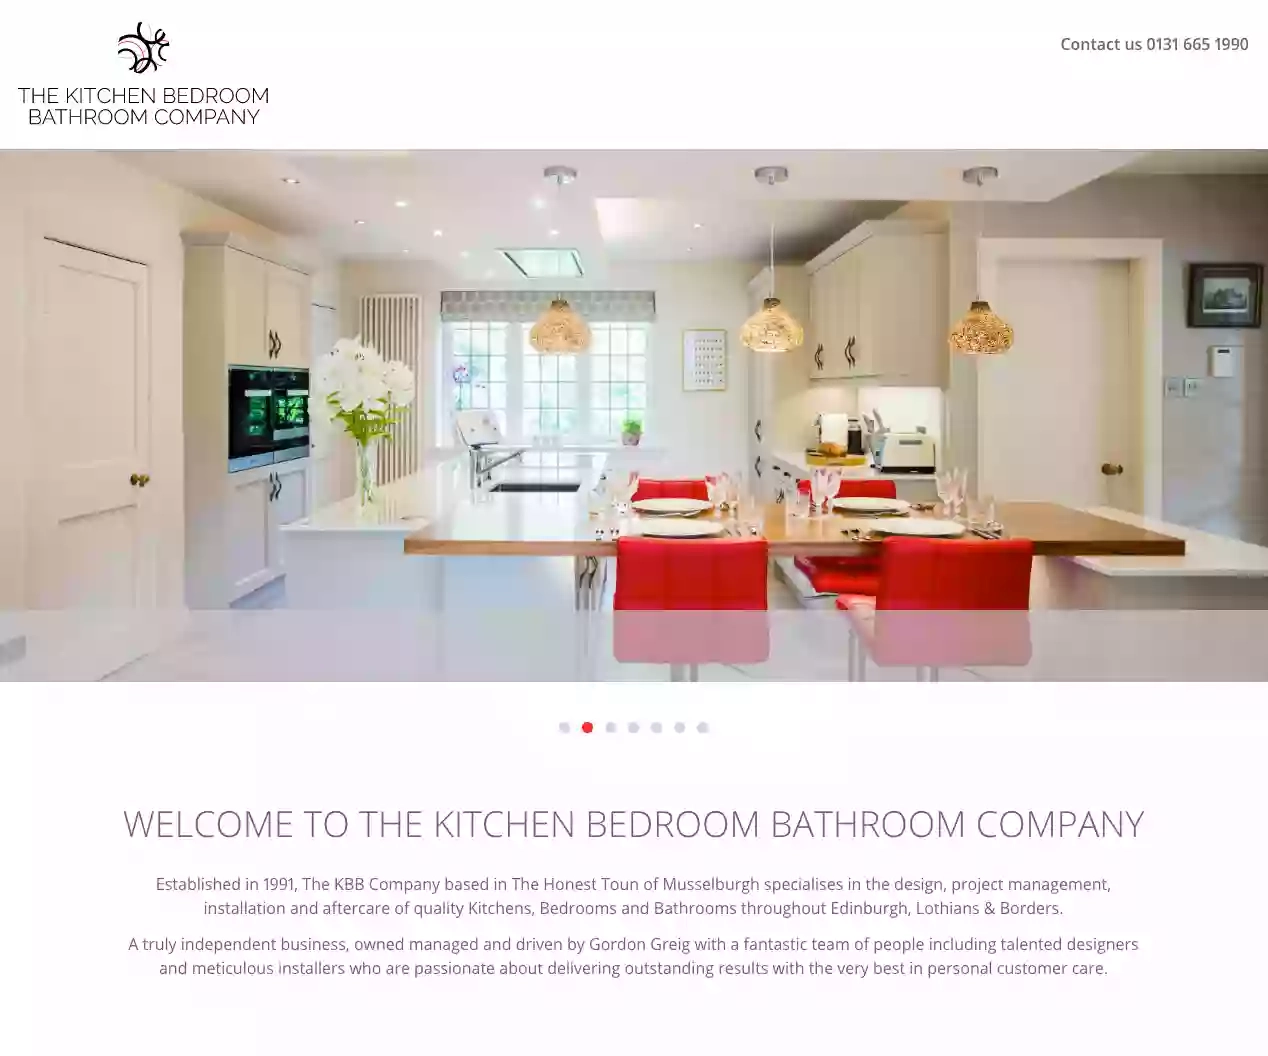 The Kitchen Bedroom Bathroom Company